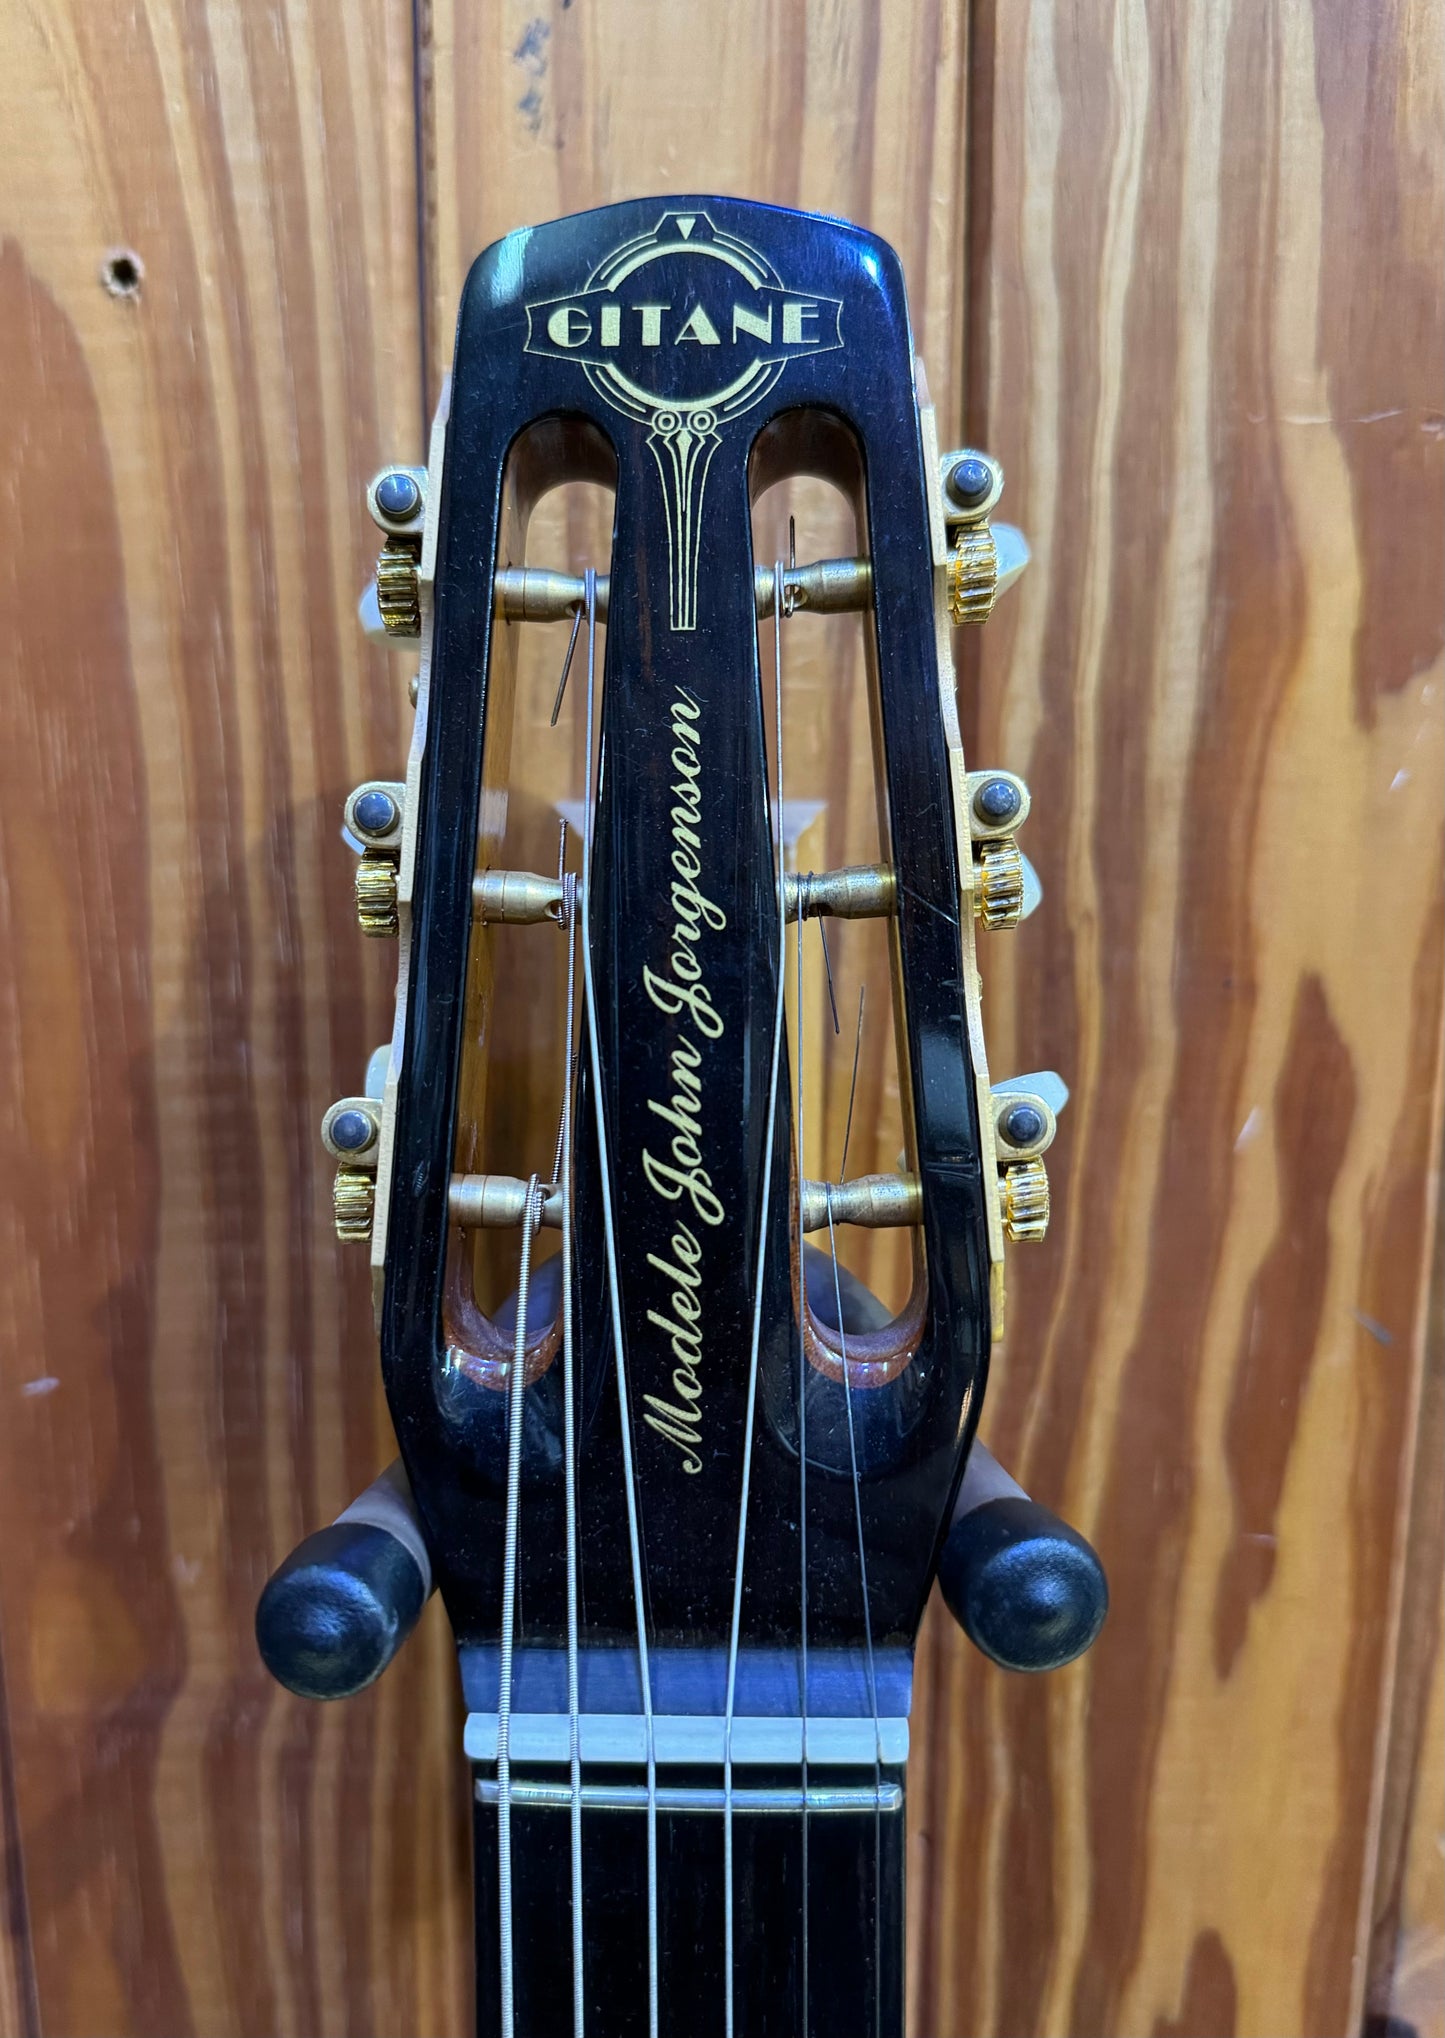 Gitane DG-300 - Professional Gypsy Jazz Guitar w/ Hardcase - Pre-Loved